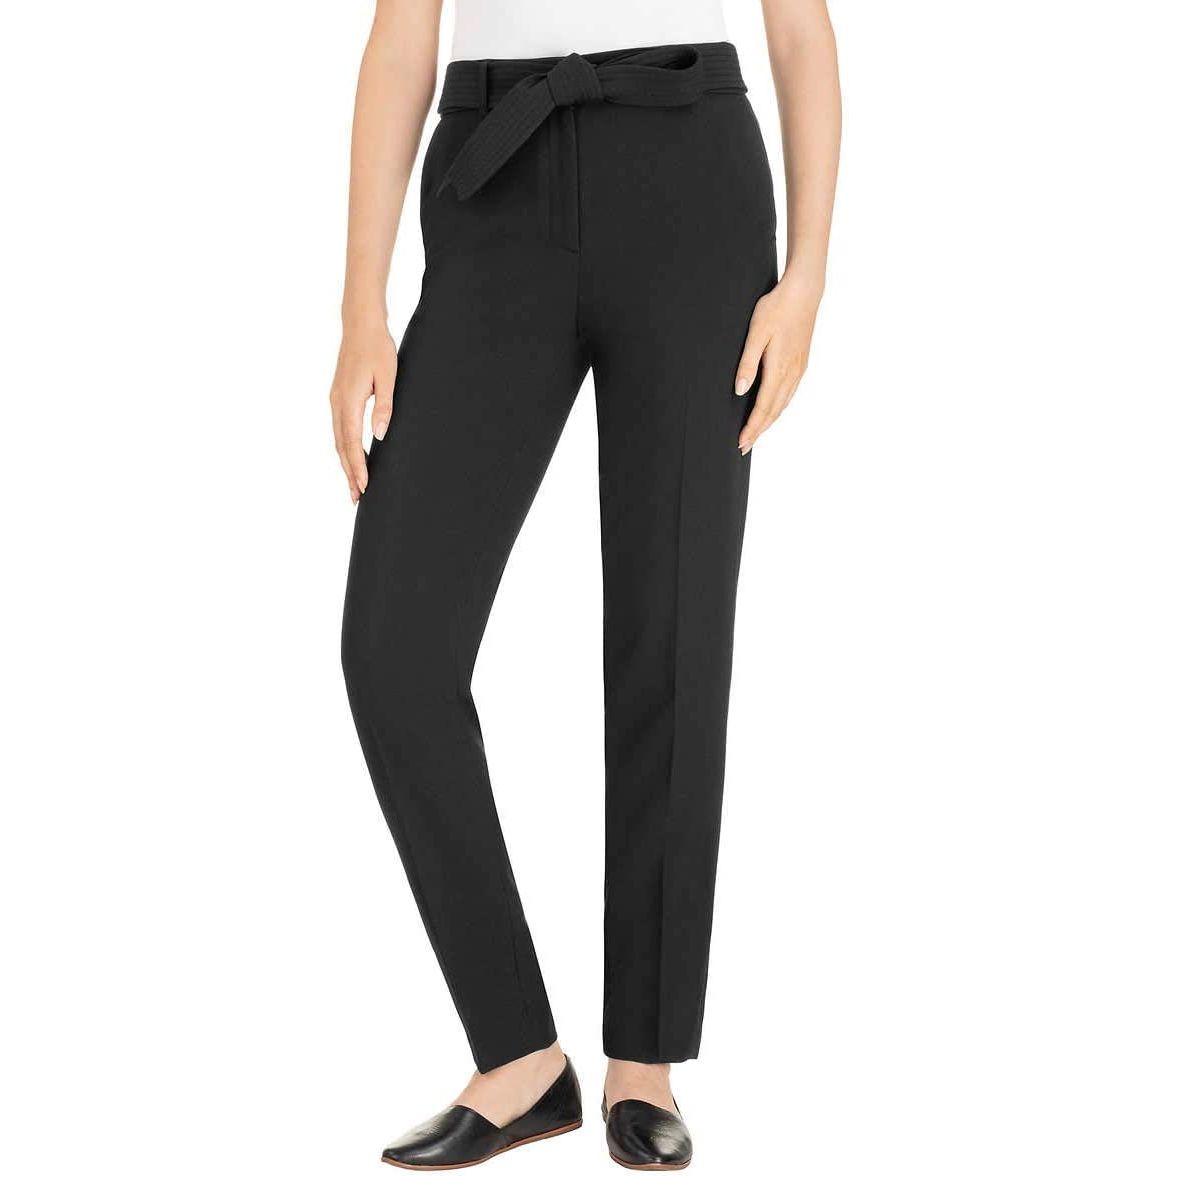 Hilary Radley Tie Front Pant: Stylish, Flattering Fit, Premium Quality, Versatile, Classic Colors